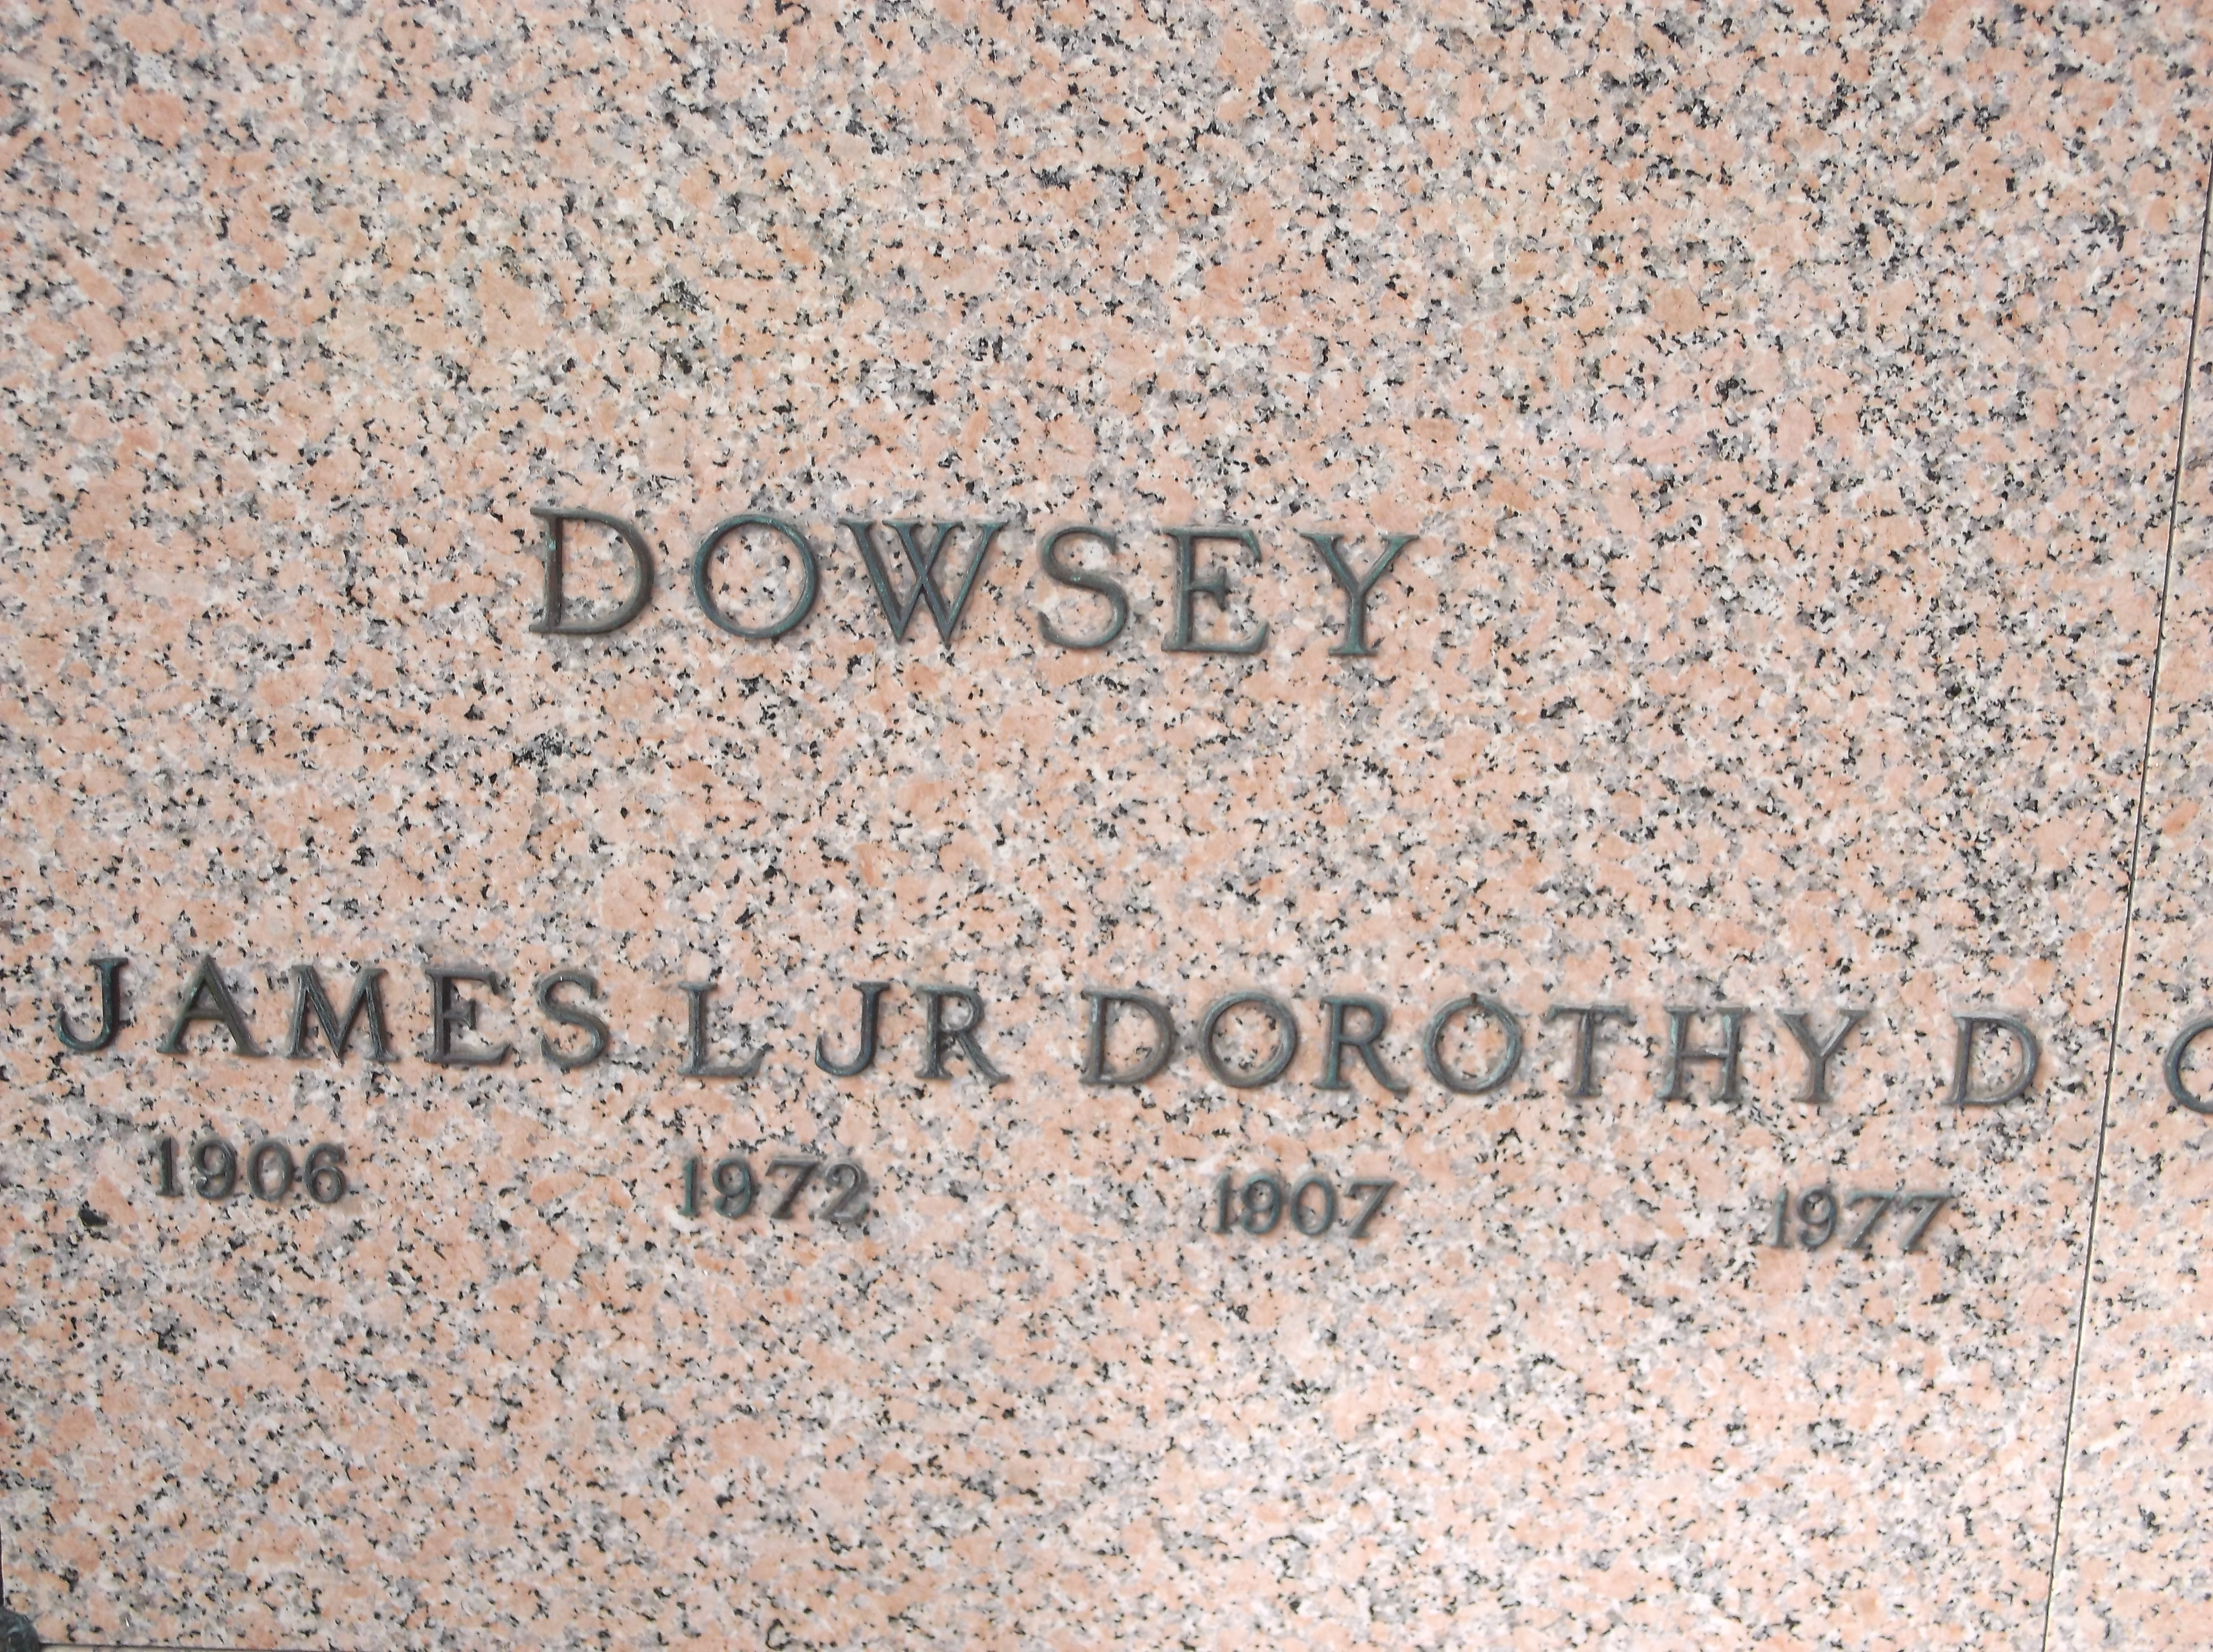 James L Dowsey, Jr